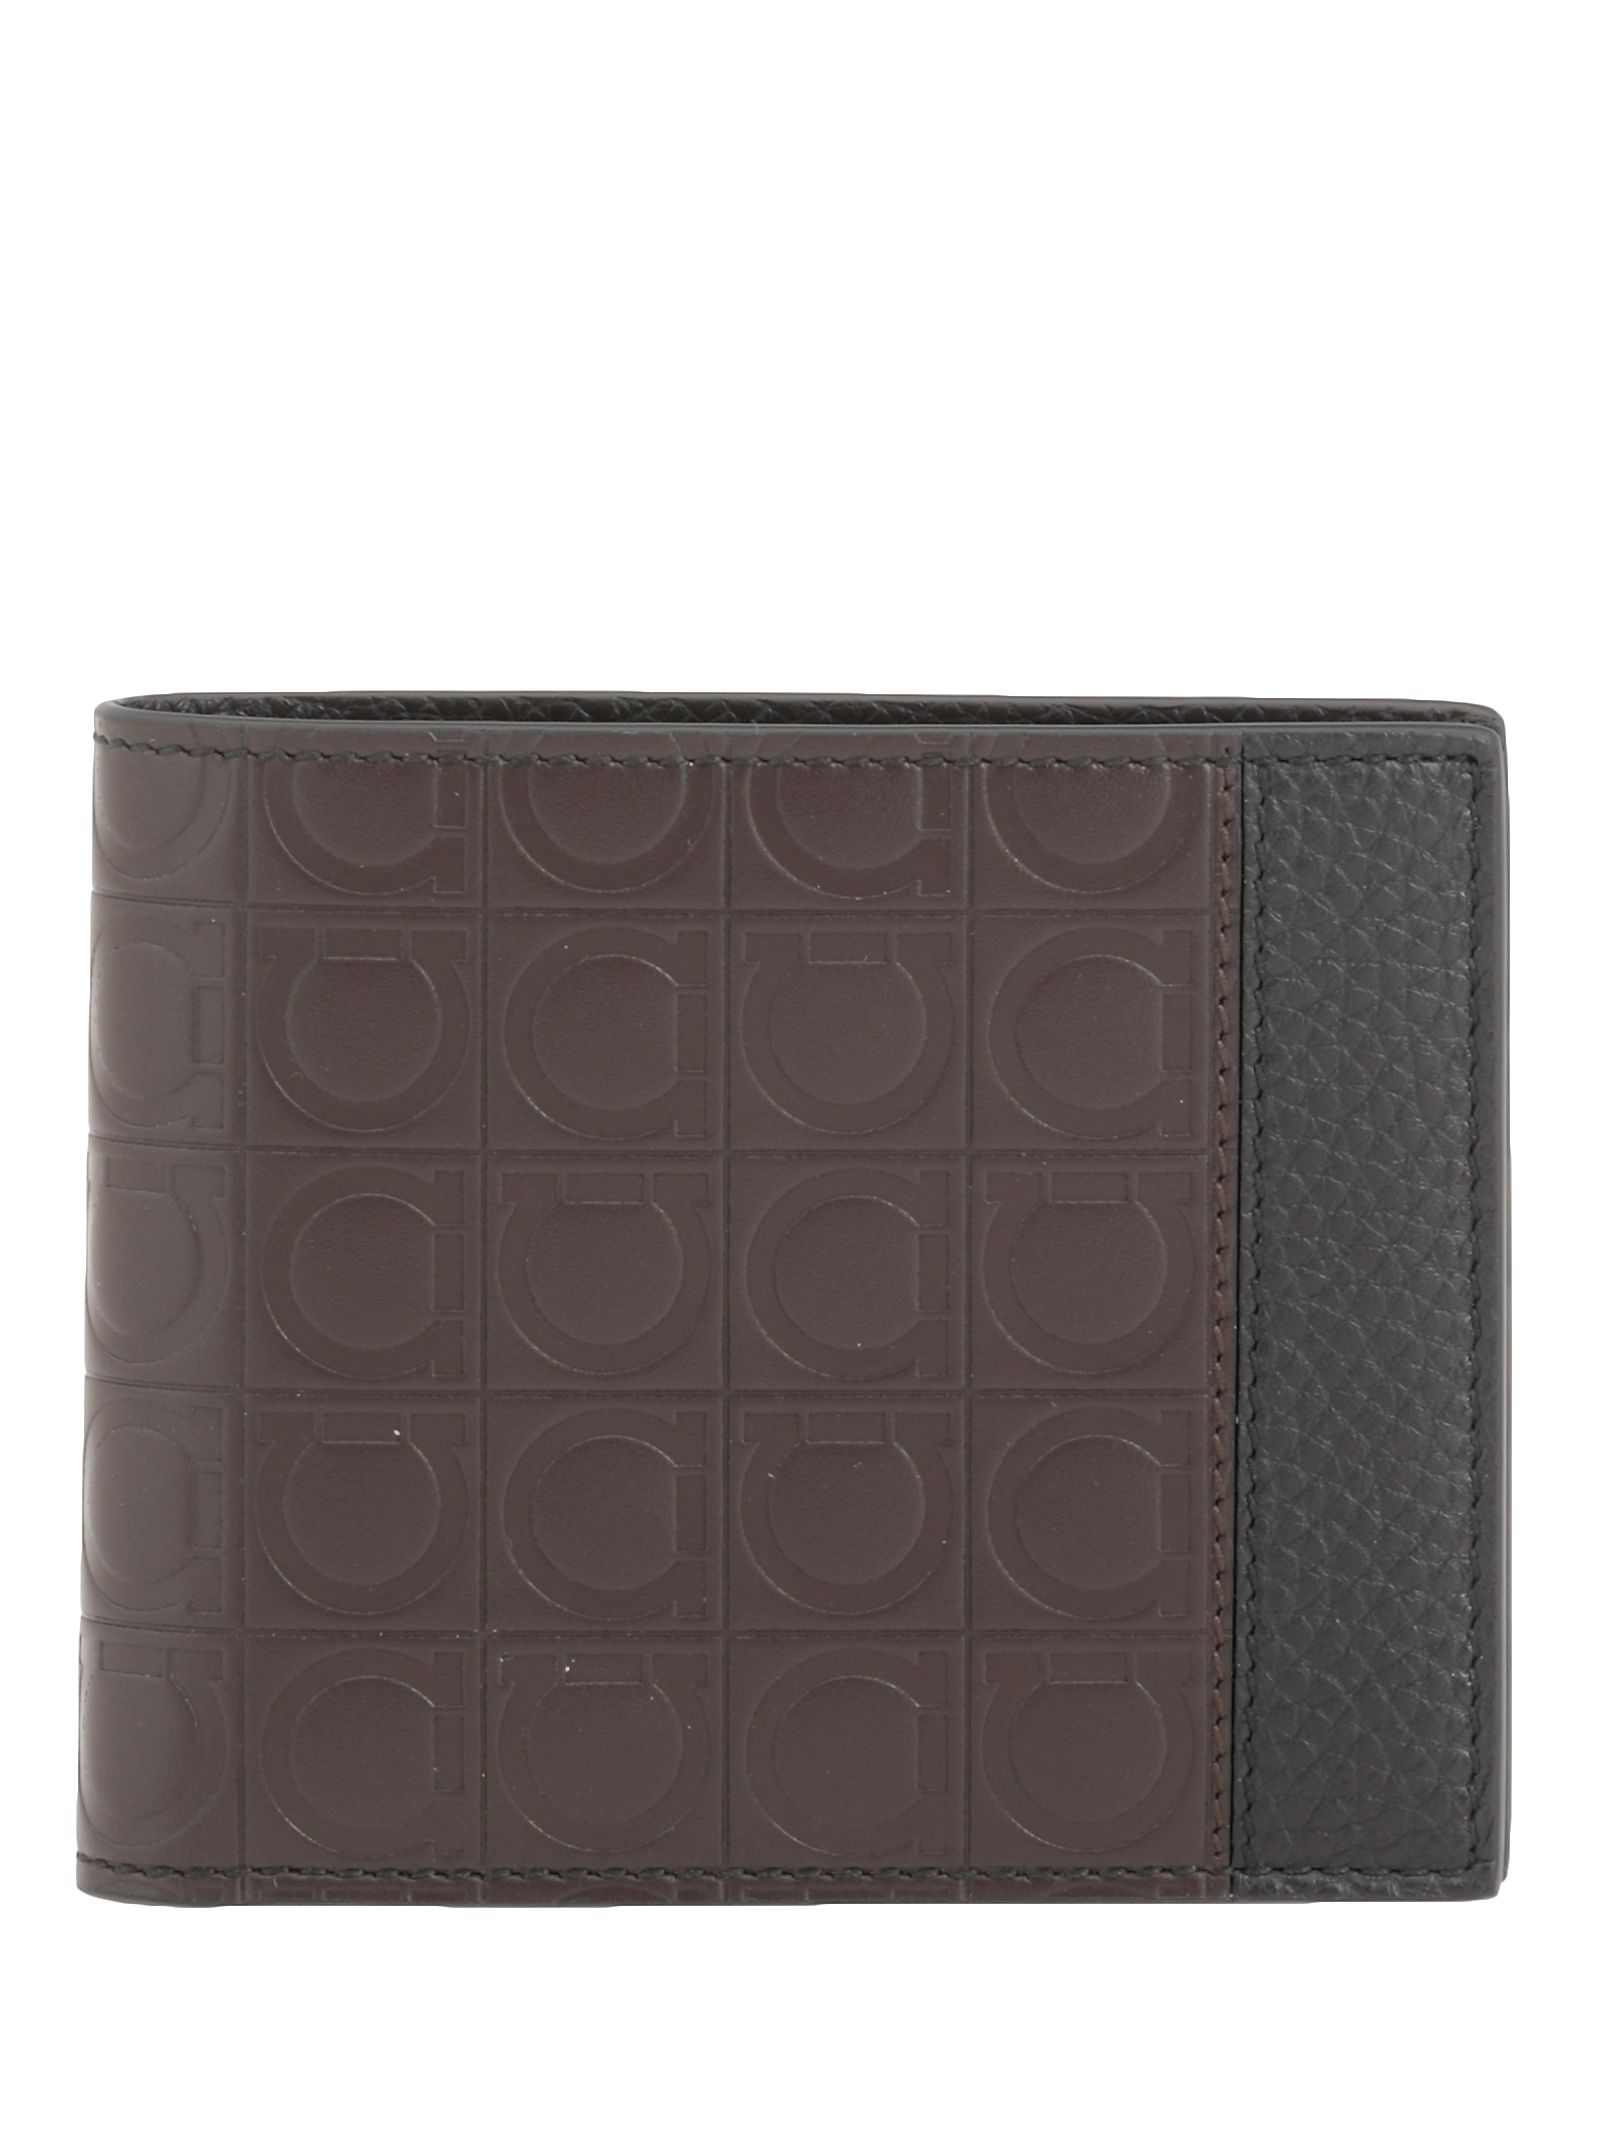 Salvatore Ferragamo Embossed E Smooth Leather Wallet In T.moro | ModeSens